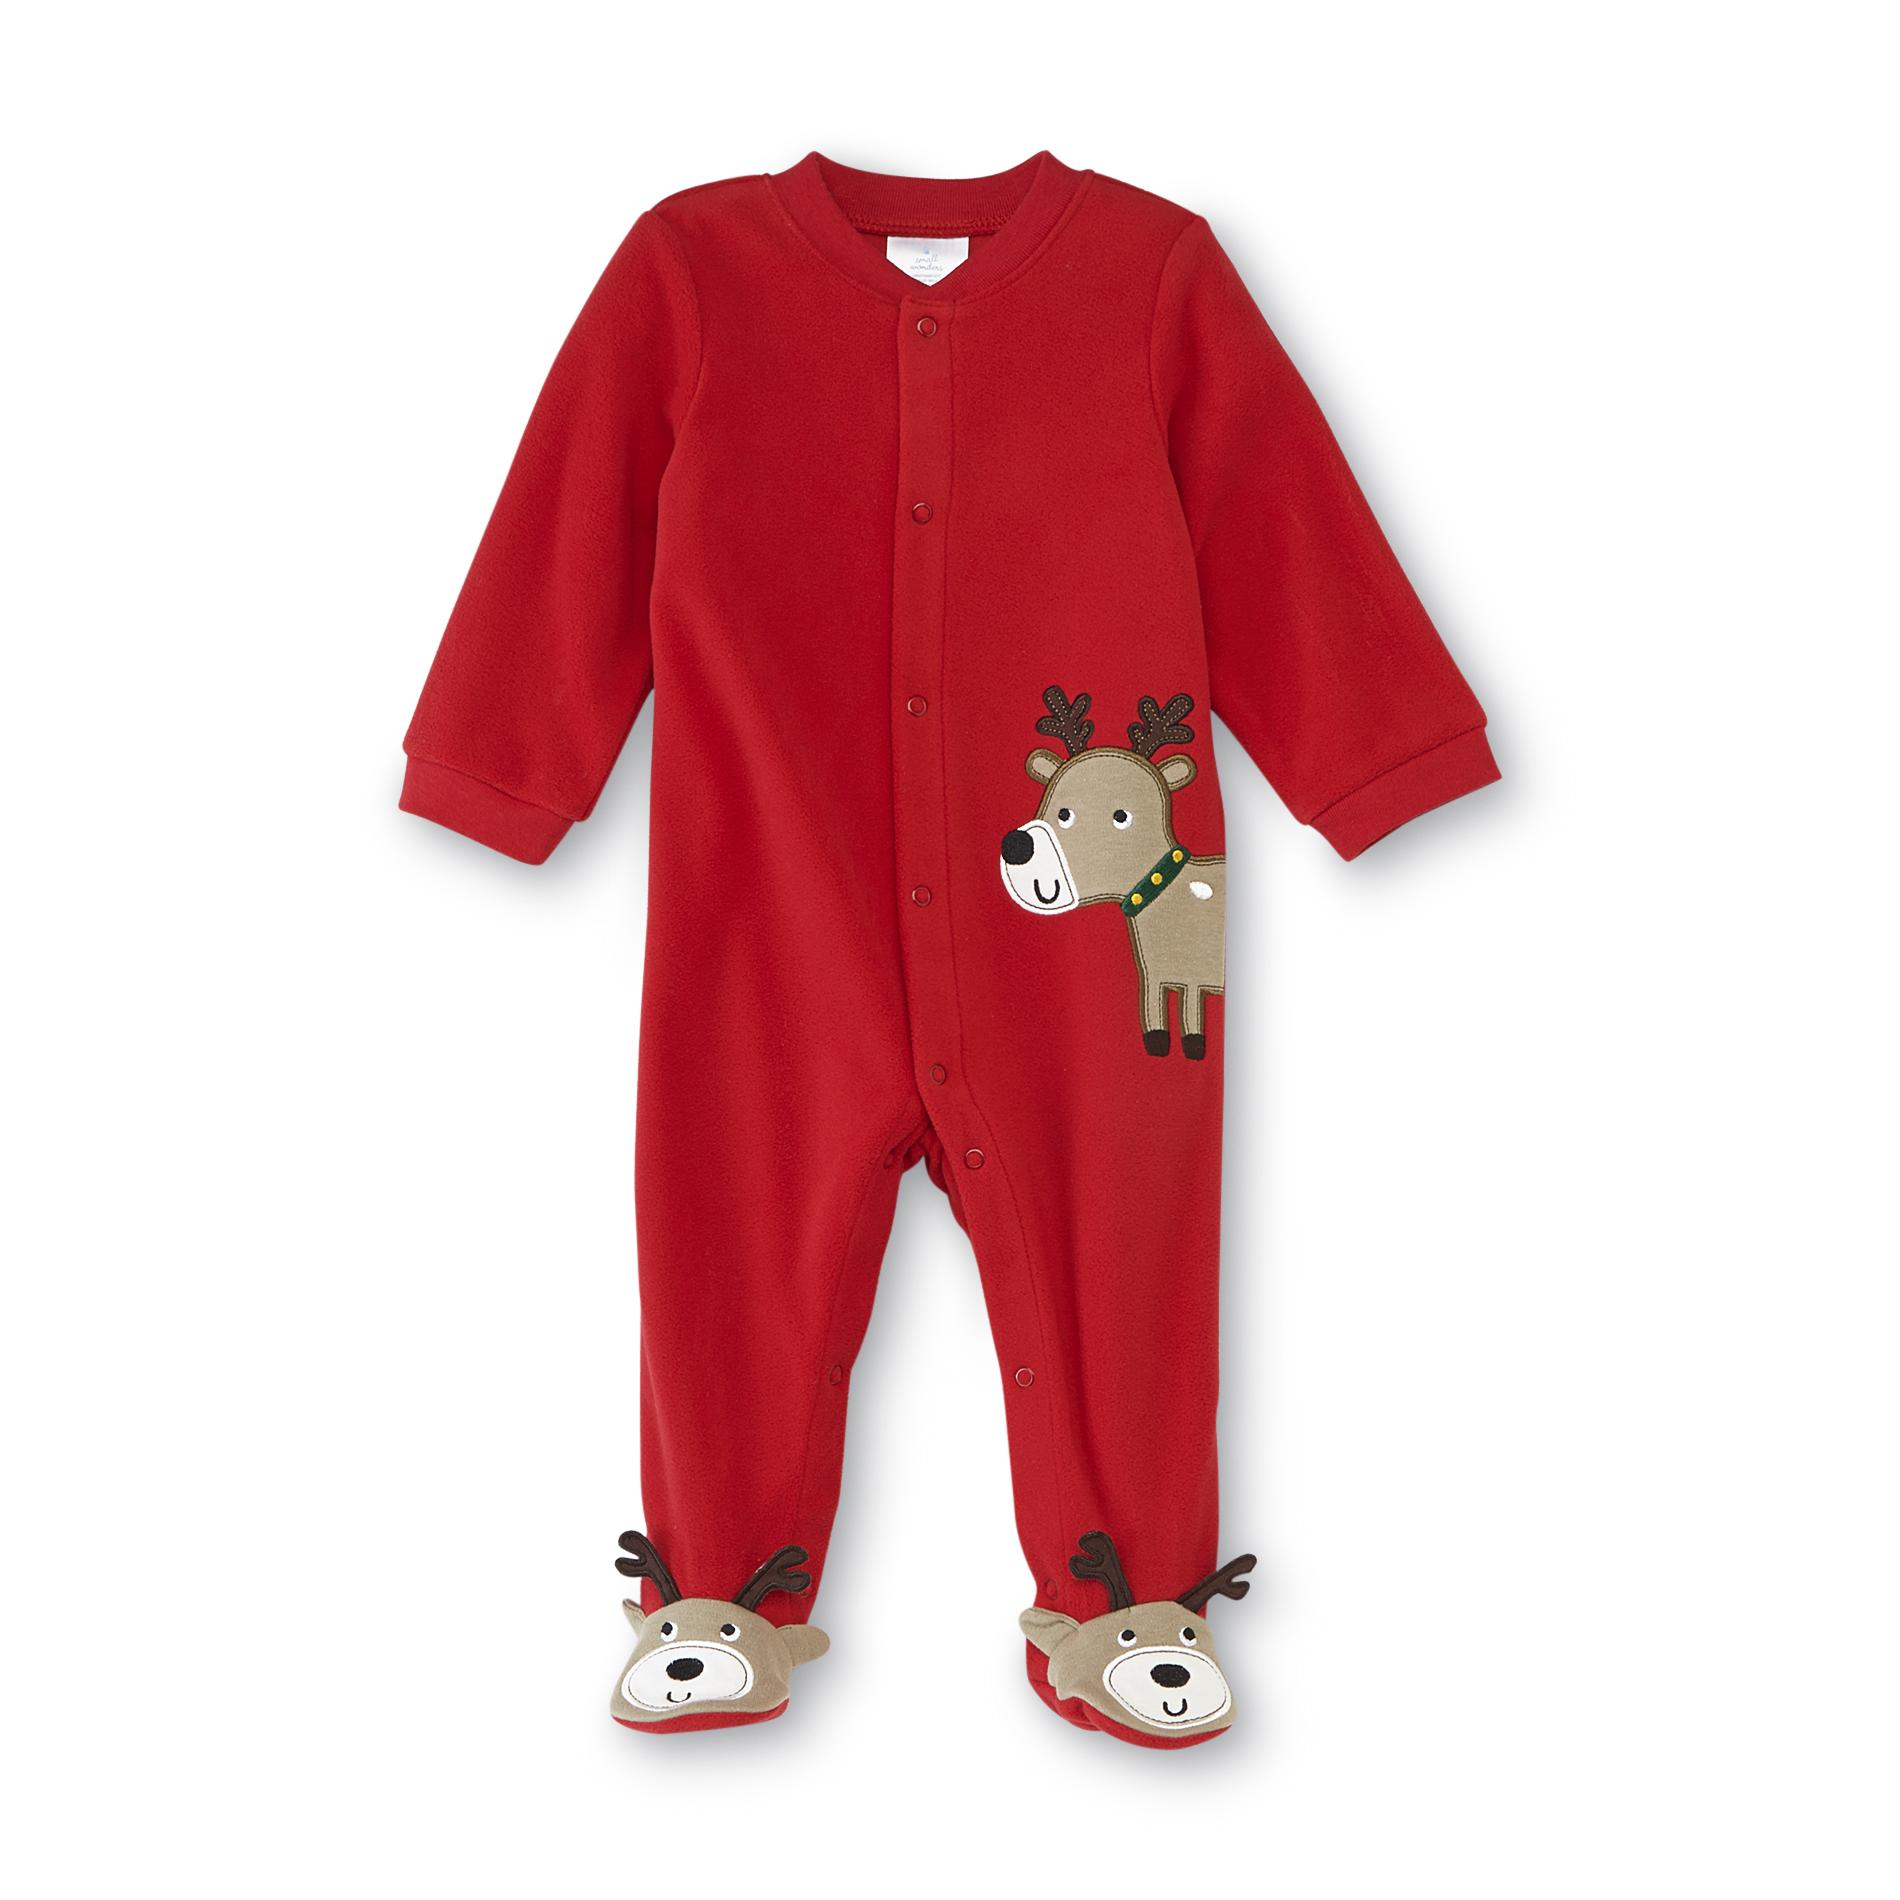 Small Wonders Newborn Boy's Fleece Sleeper Pajamas - Reindeer